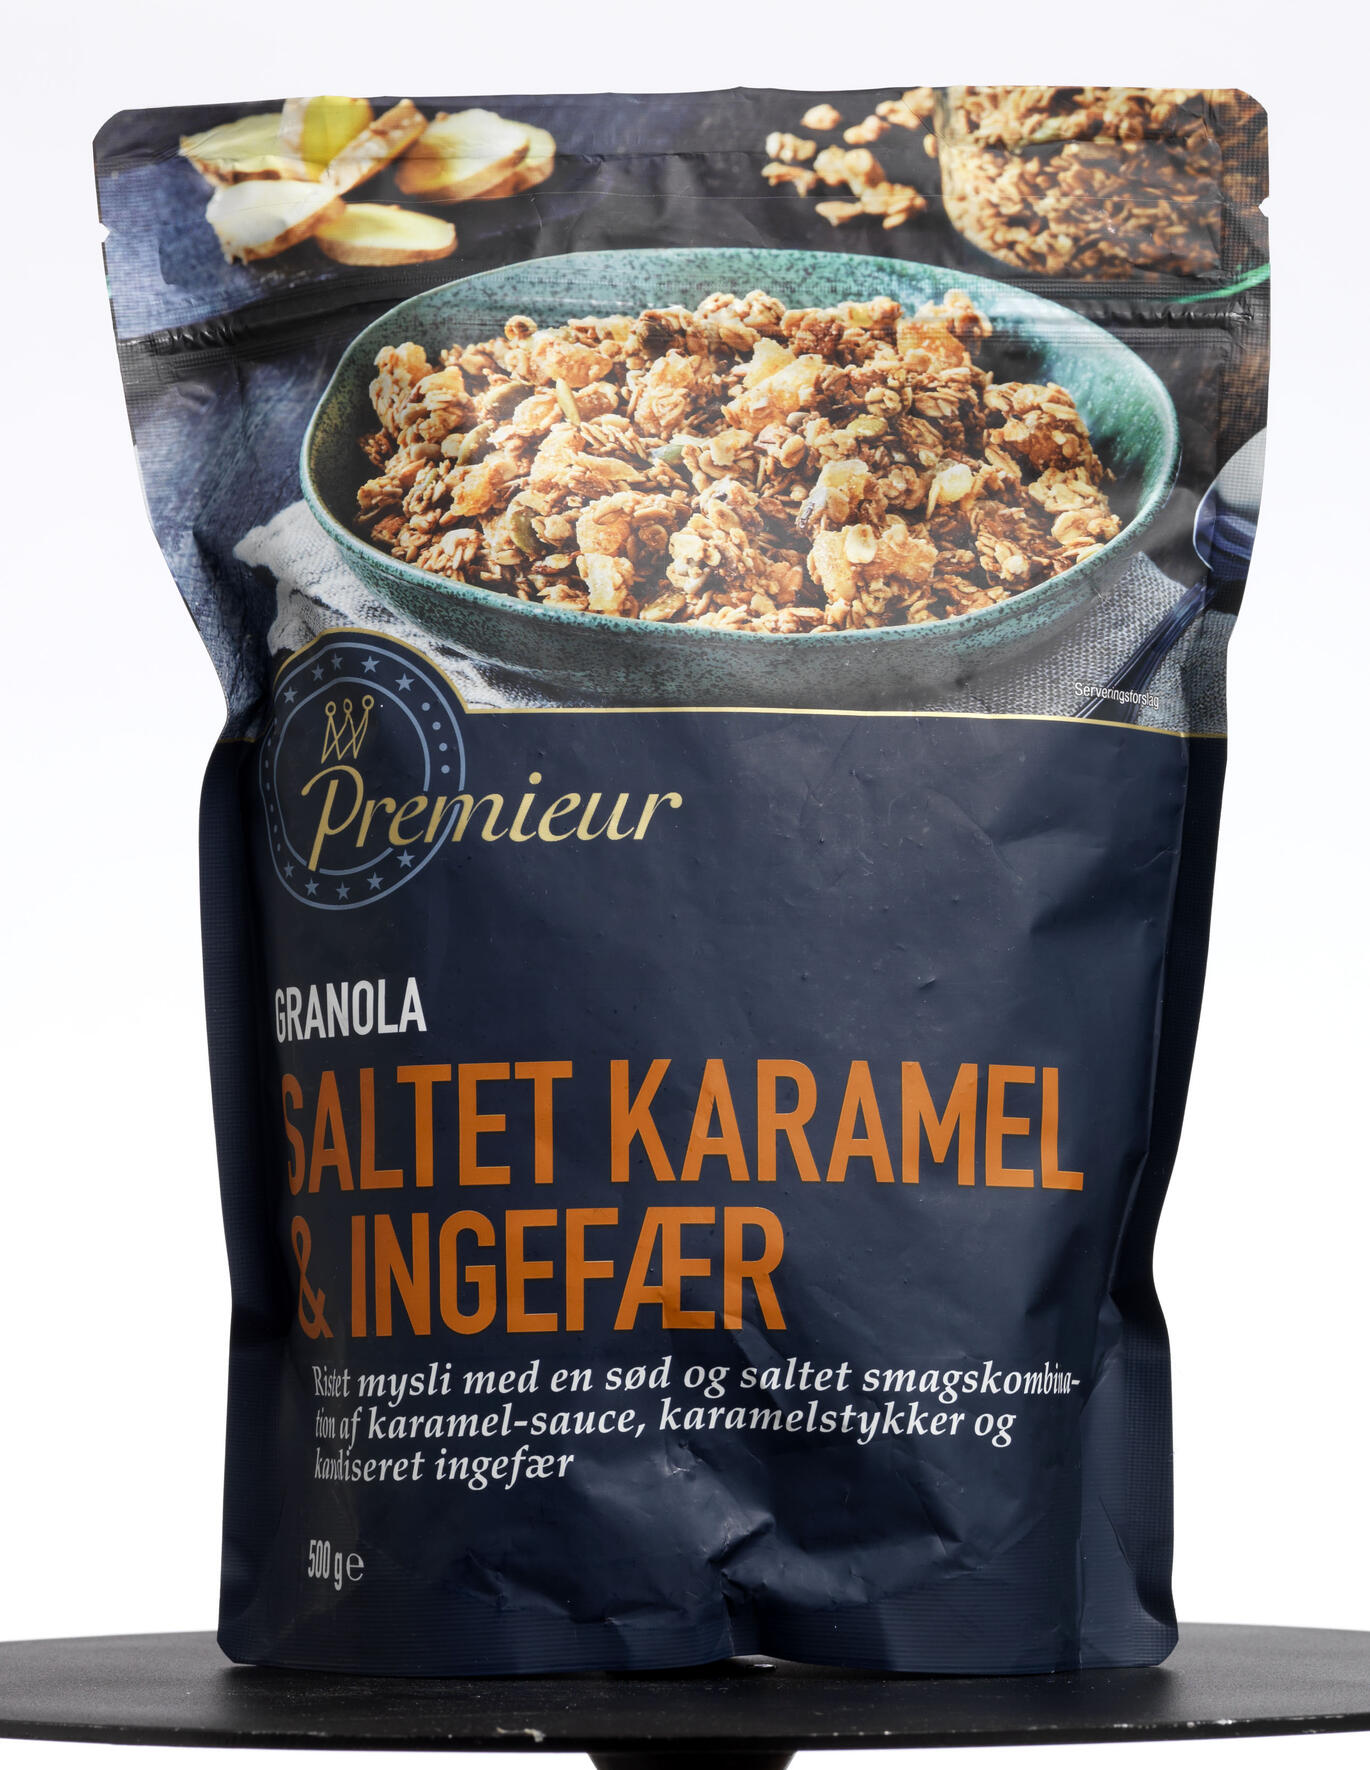 Granola saltet karamel & ingefær Premieur